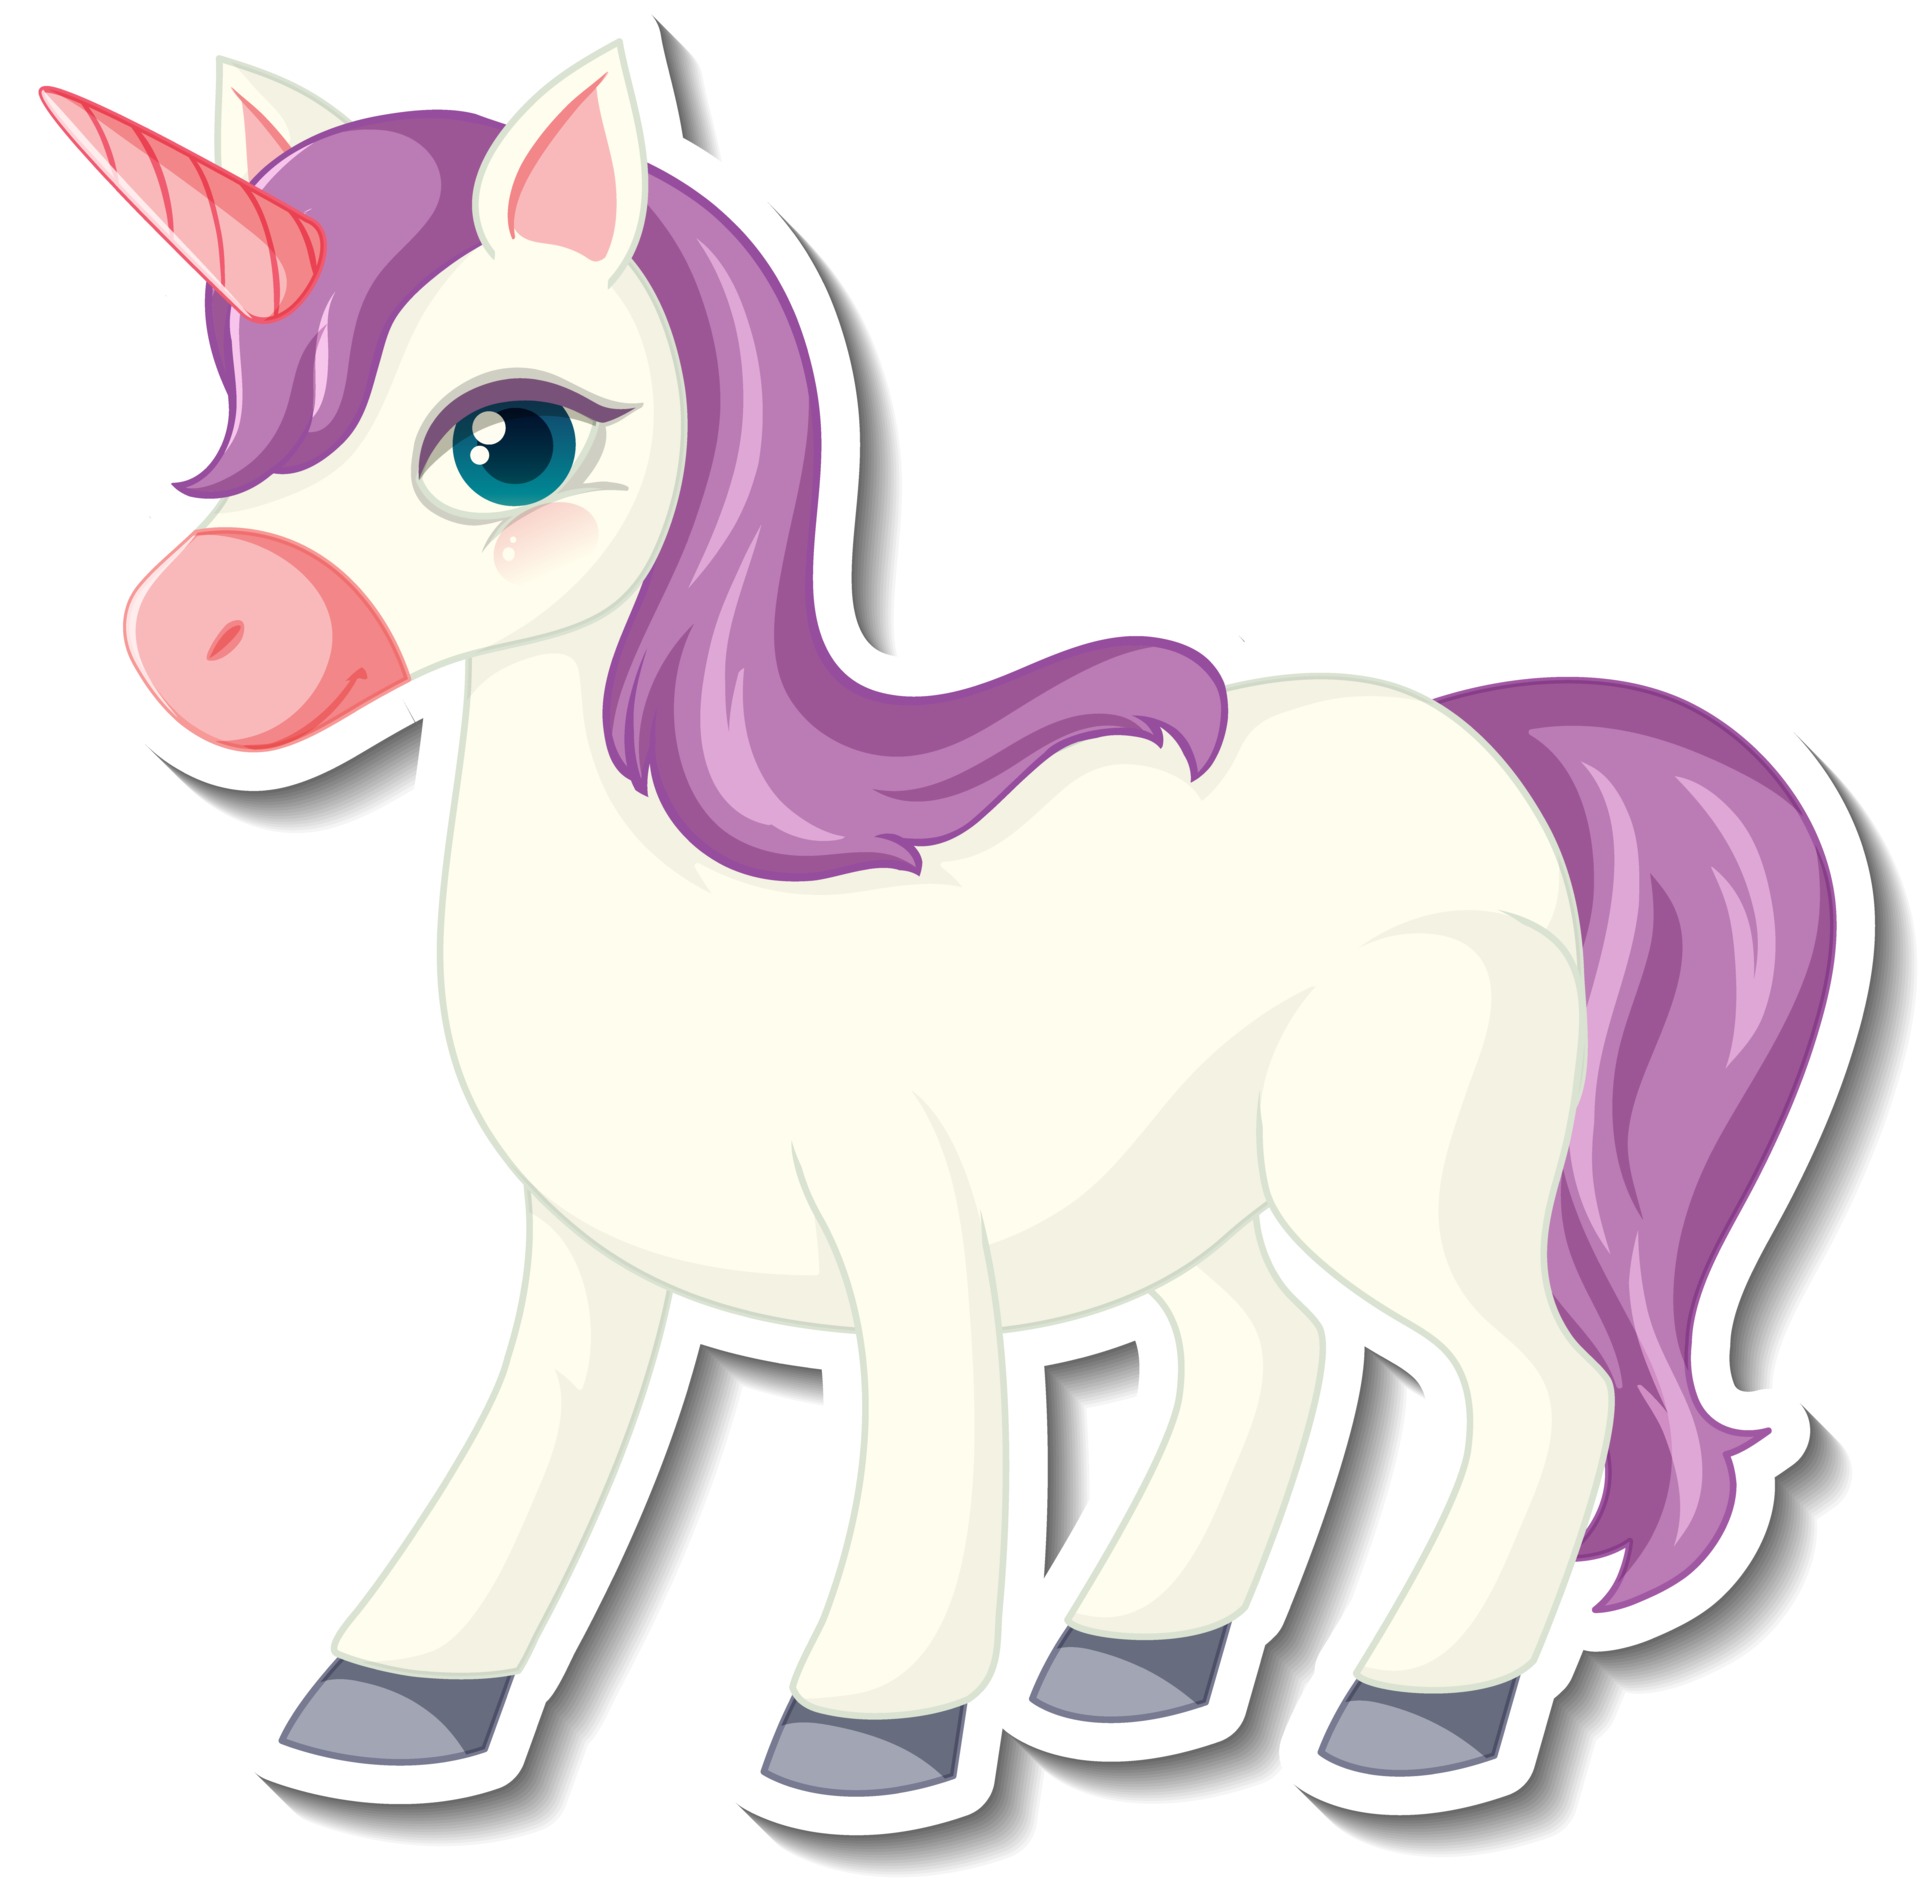 Cute unicorn stickers with a purple unicorn cartoon character ...